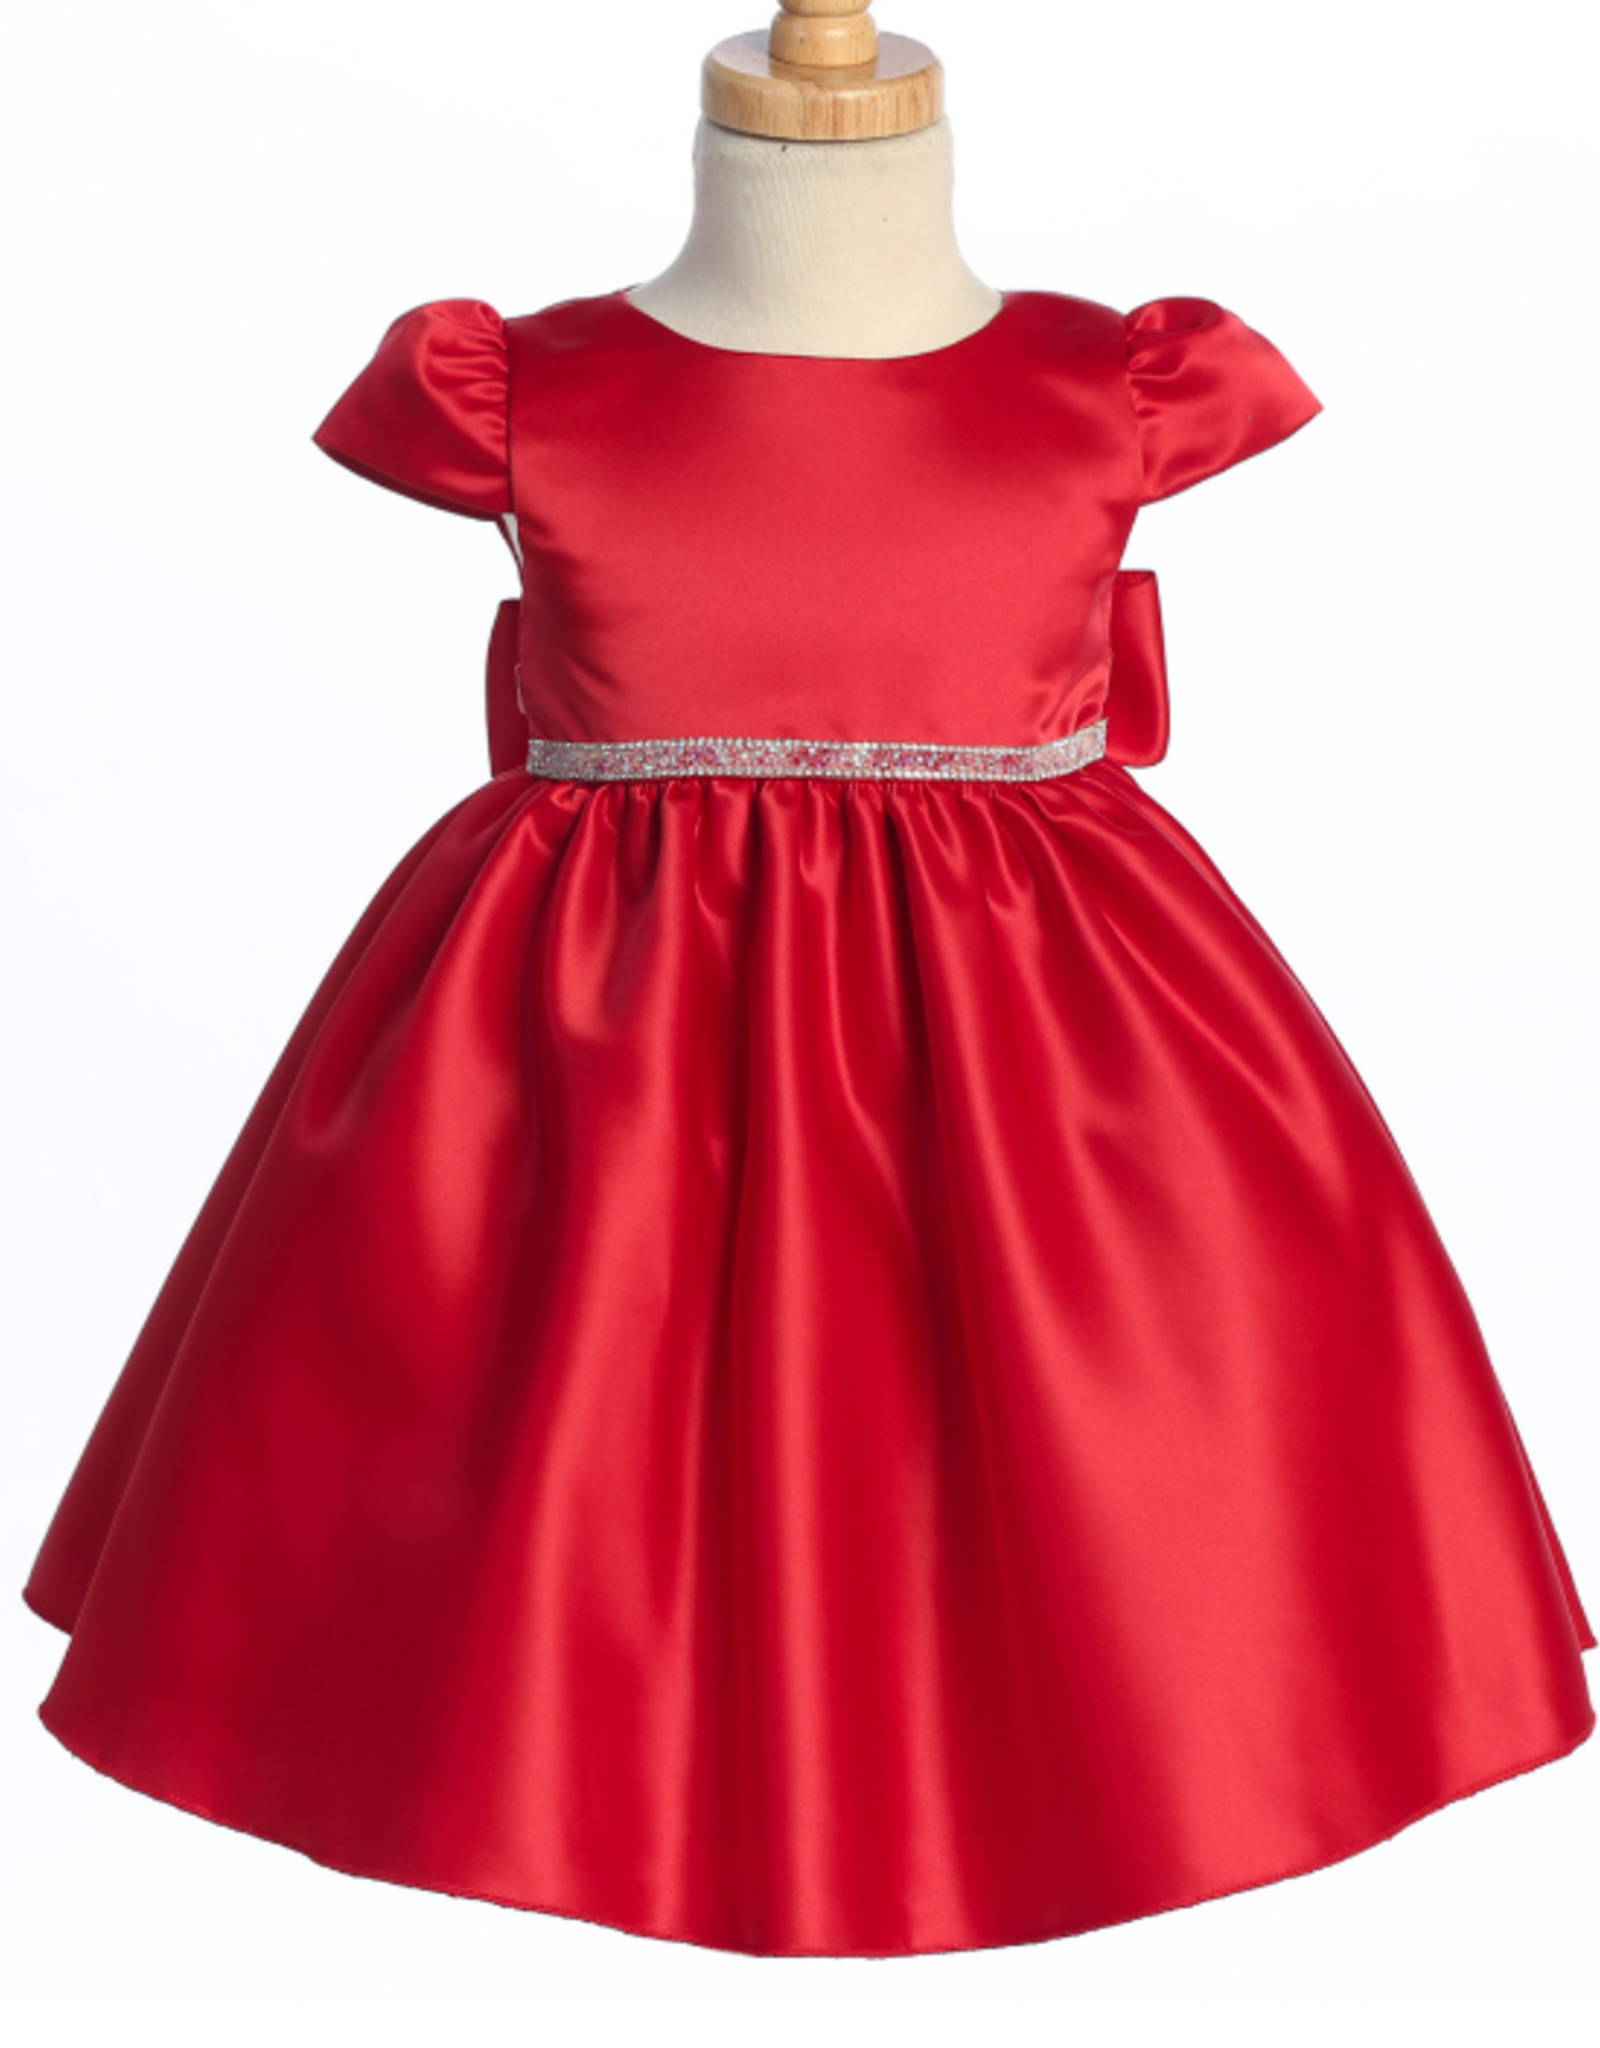 Swea Pea & Lilli Red Satin Dress